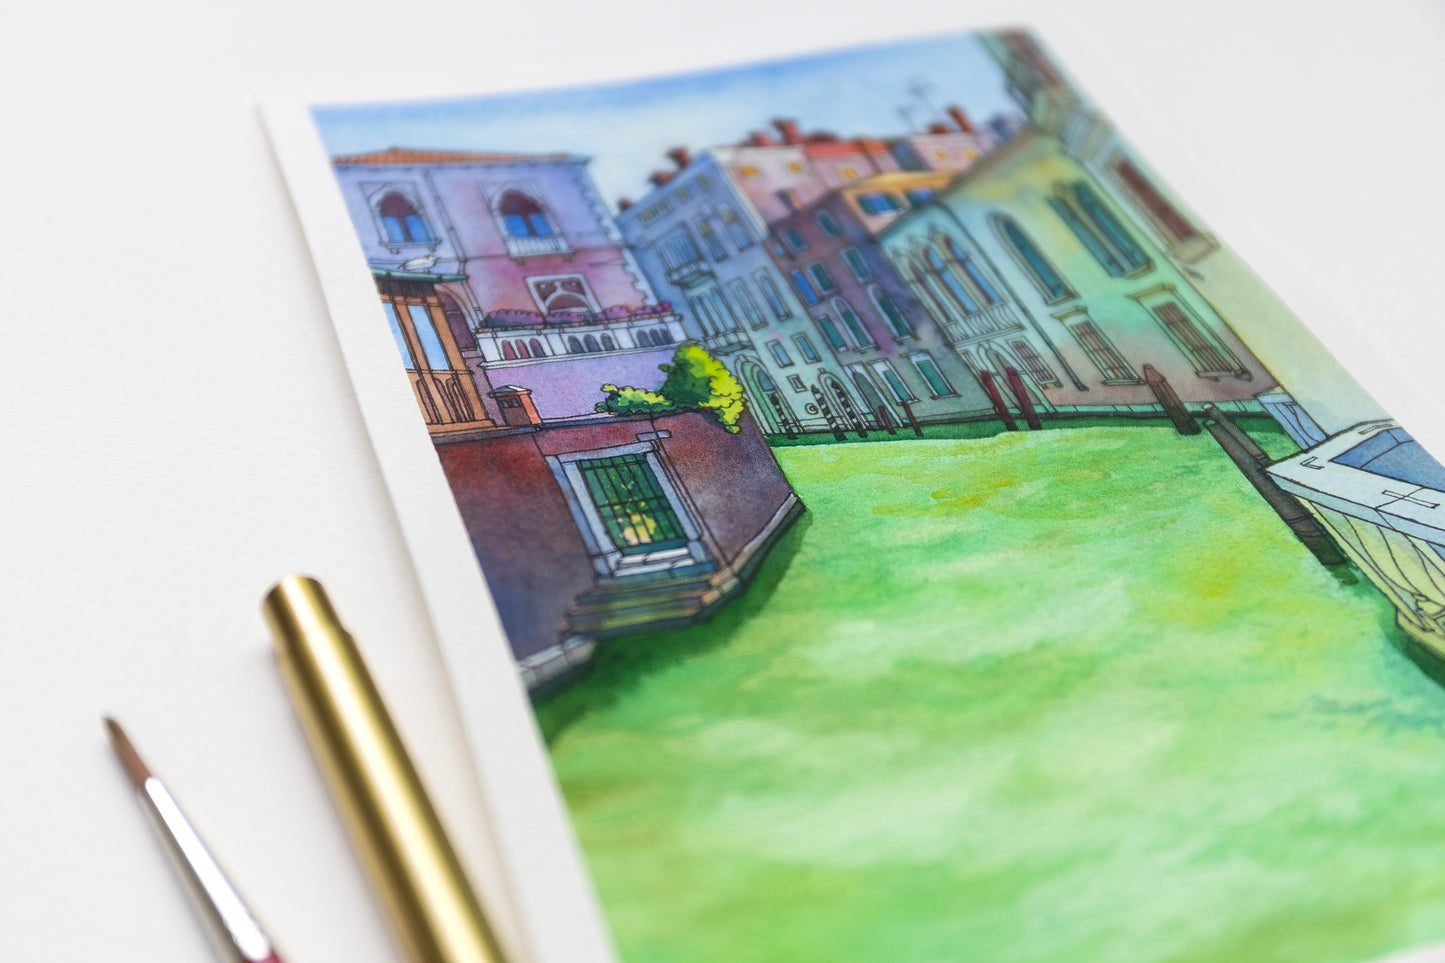 VENICE Canal Watercolor Painting Giclée Print #A14